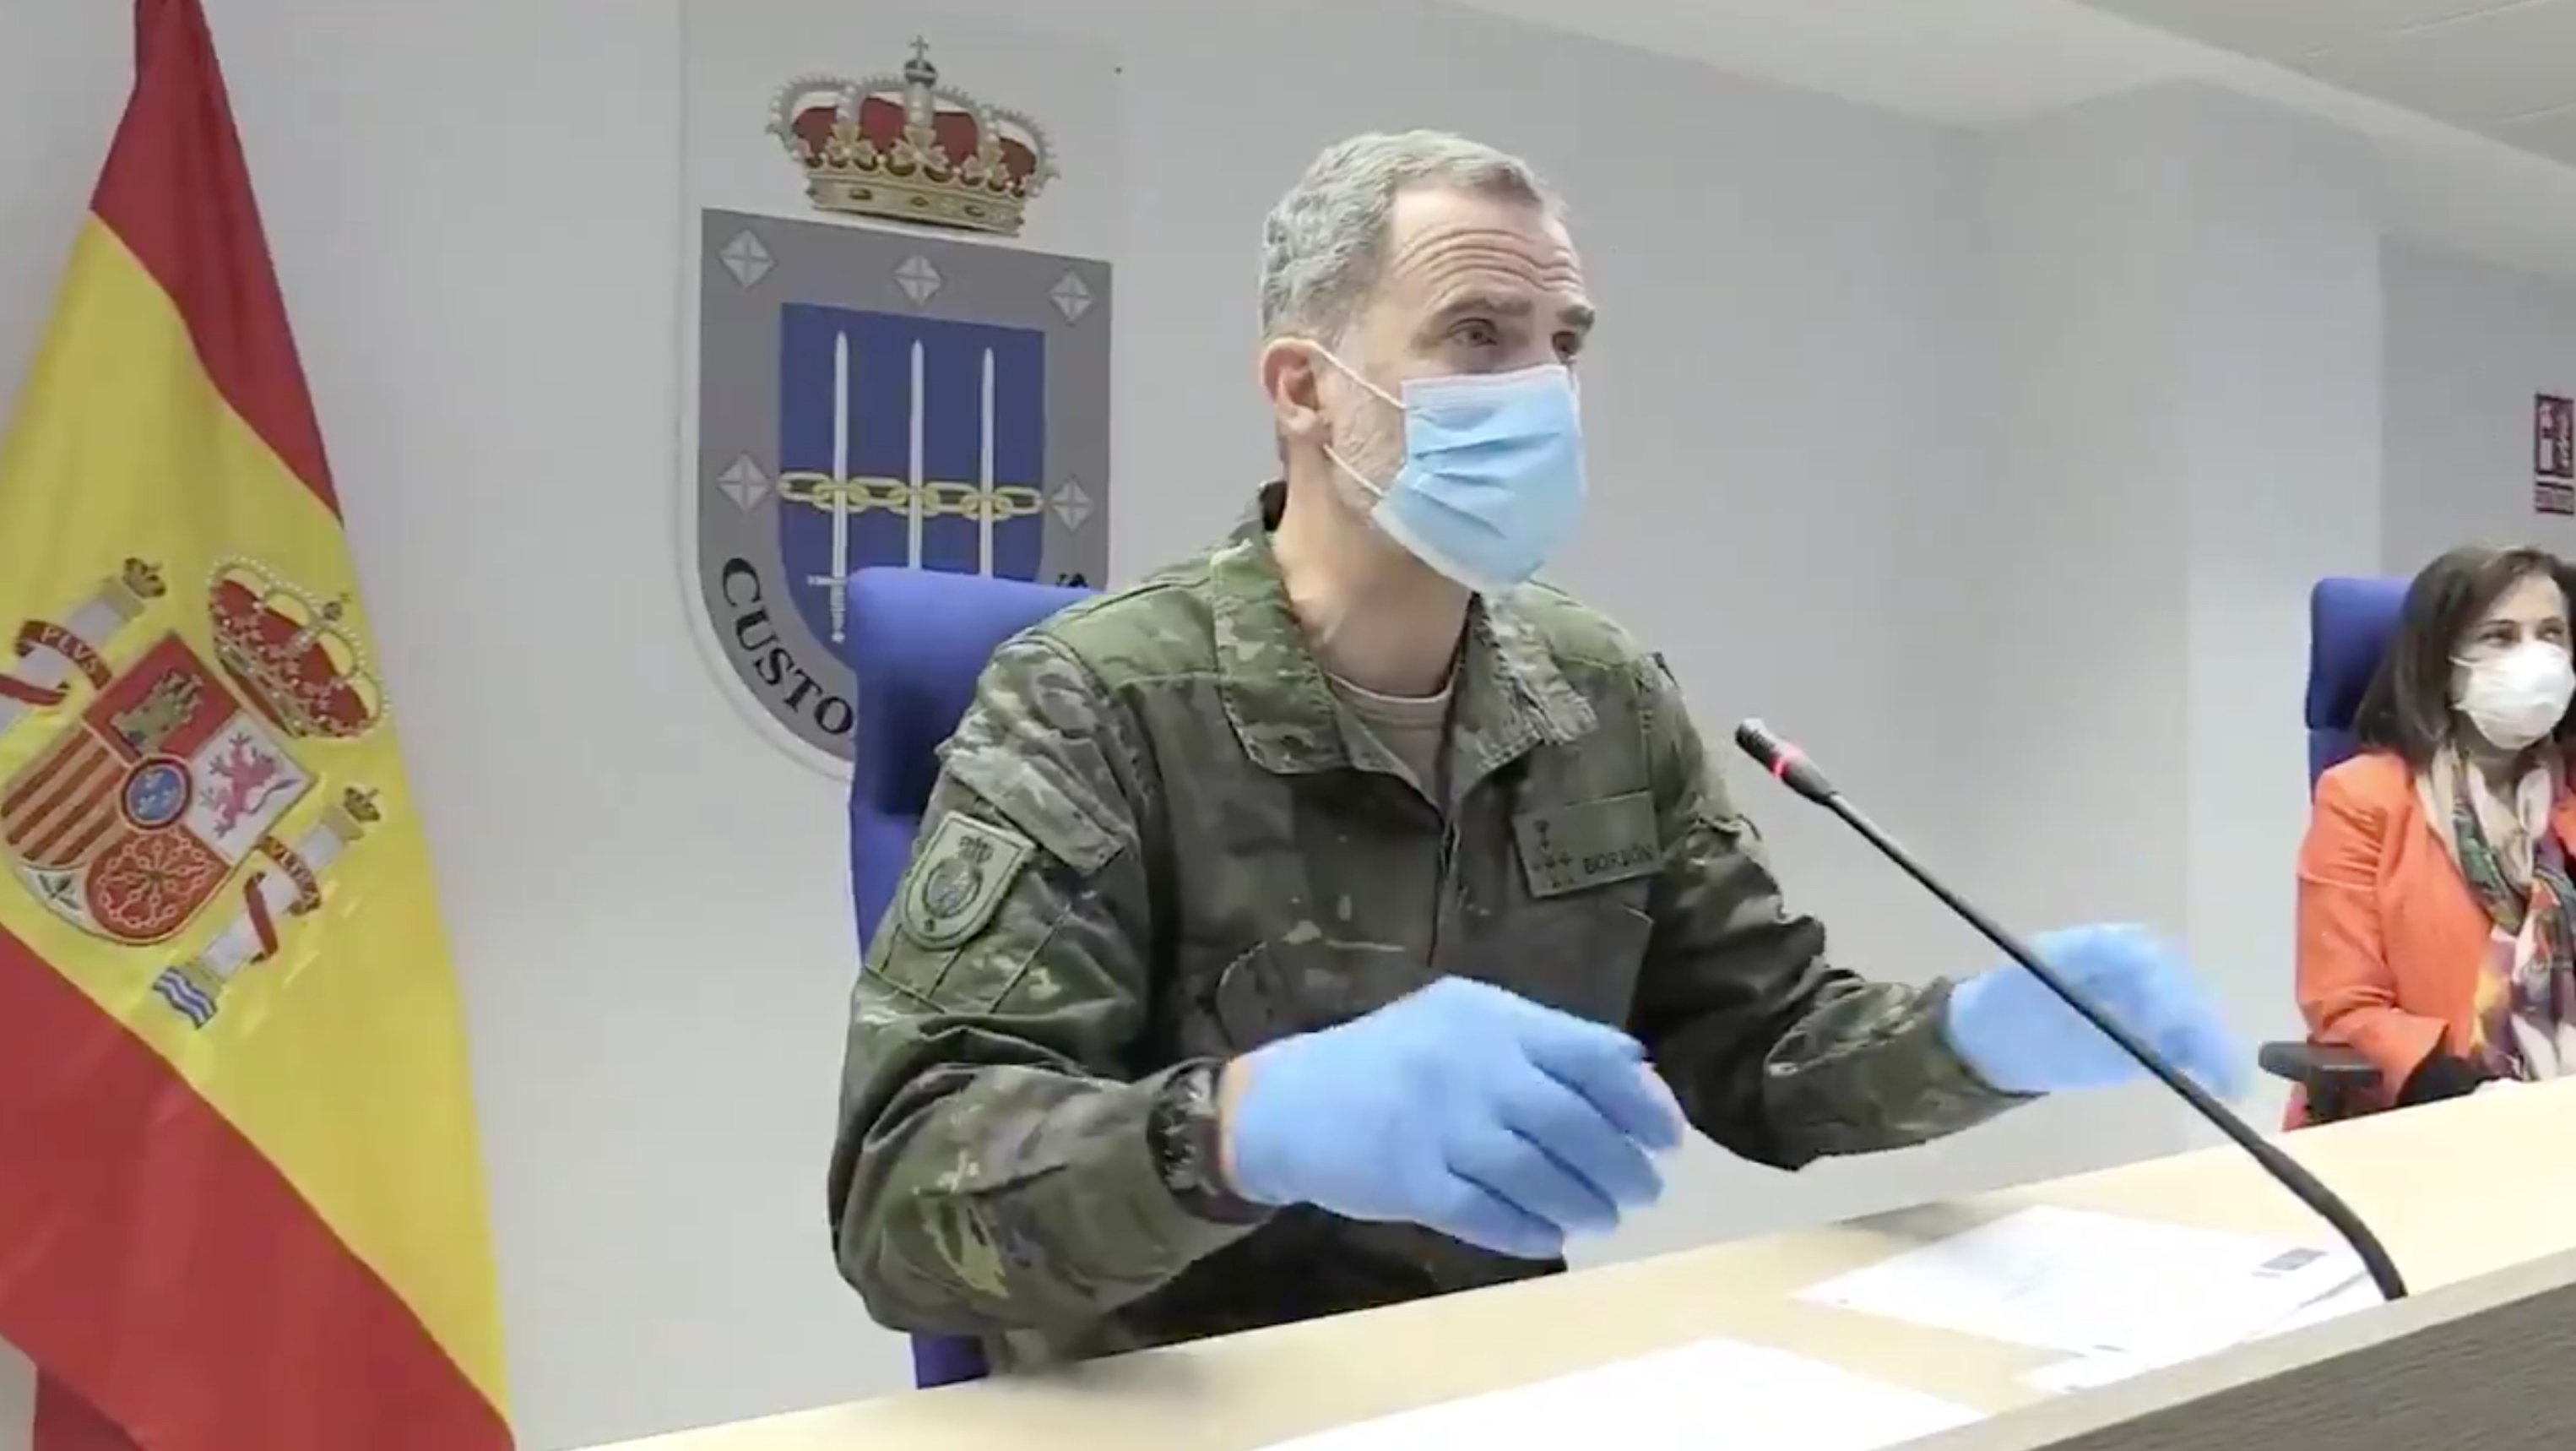 Ridícul 'recluta' Felipe, disfressat a la guerra del coronavirus: "Salvados"